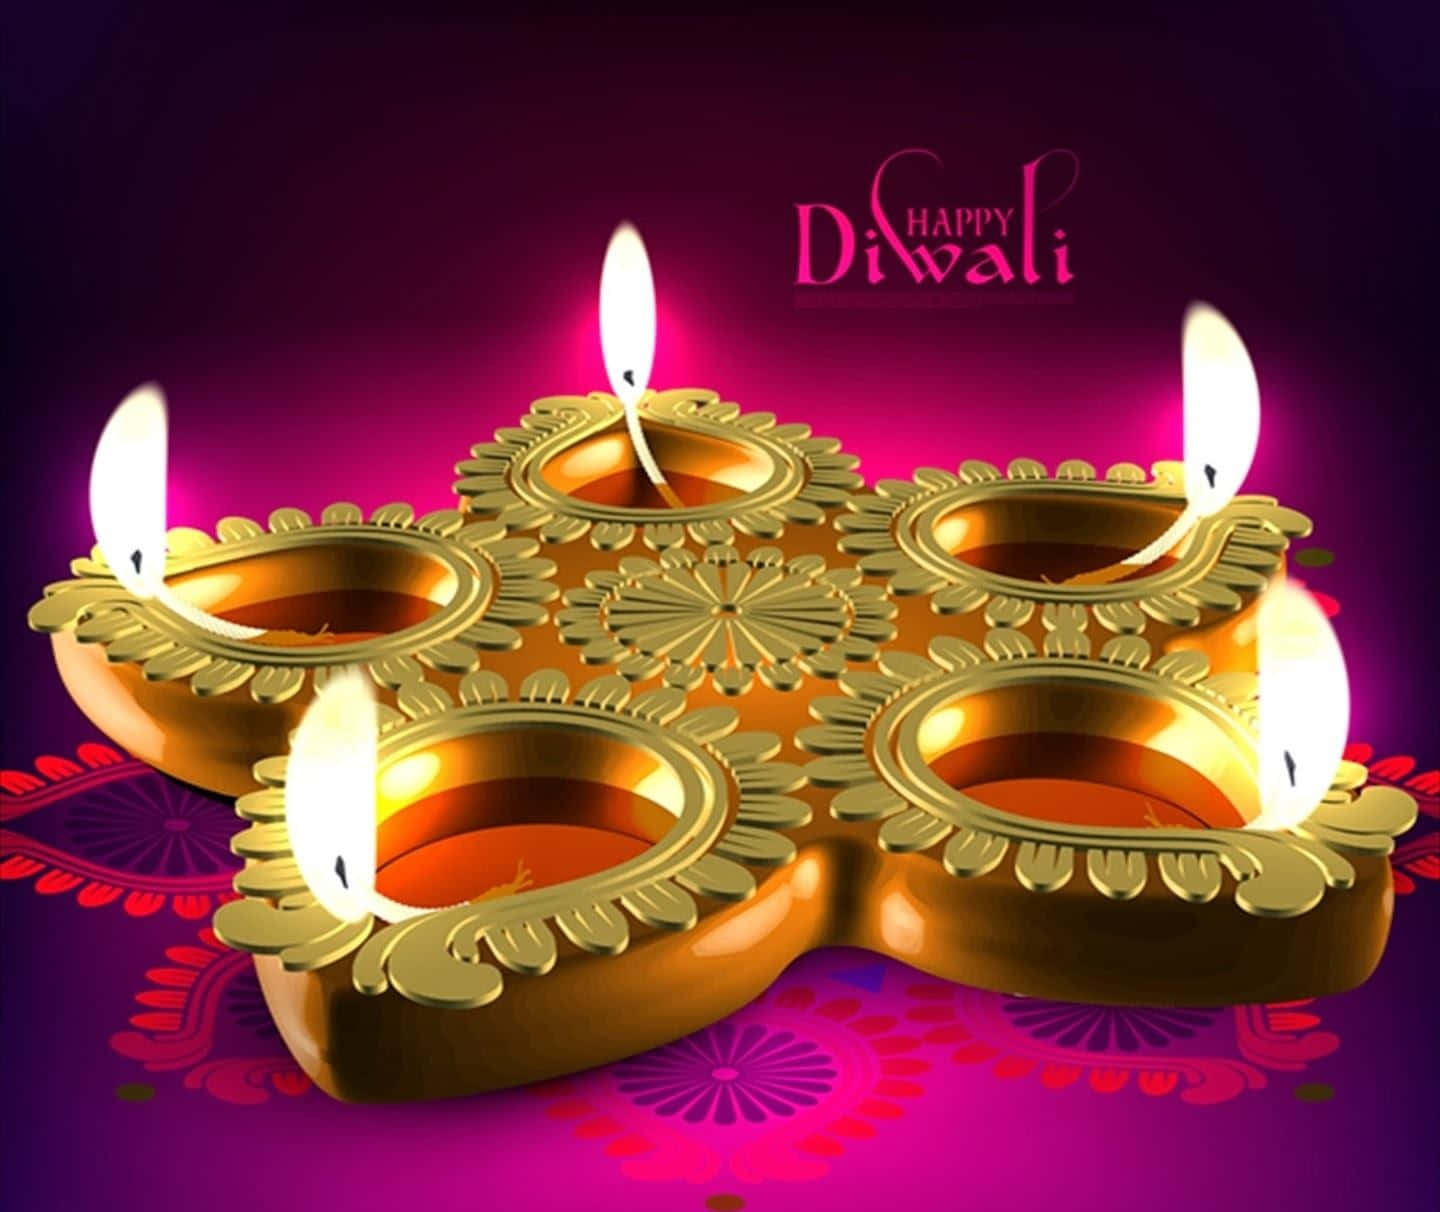 Wishing Everyone A Happy Diwali